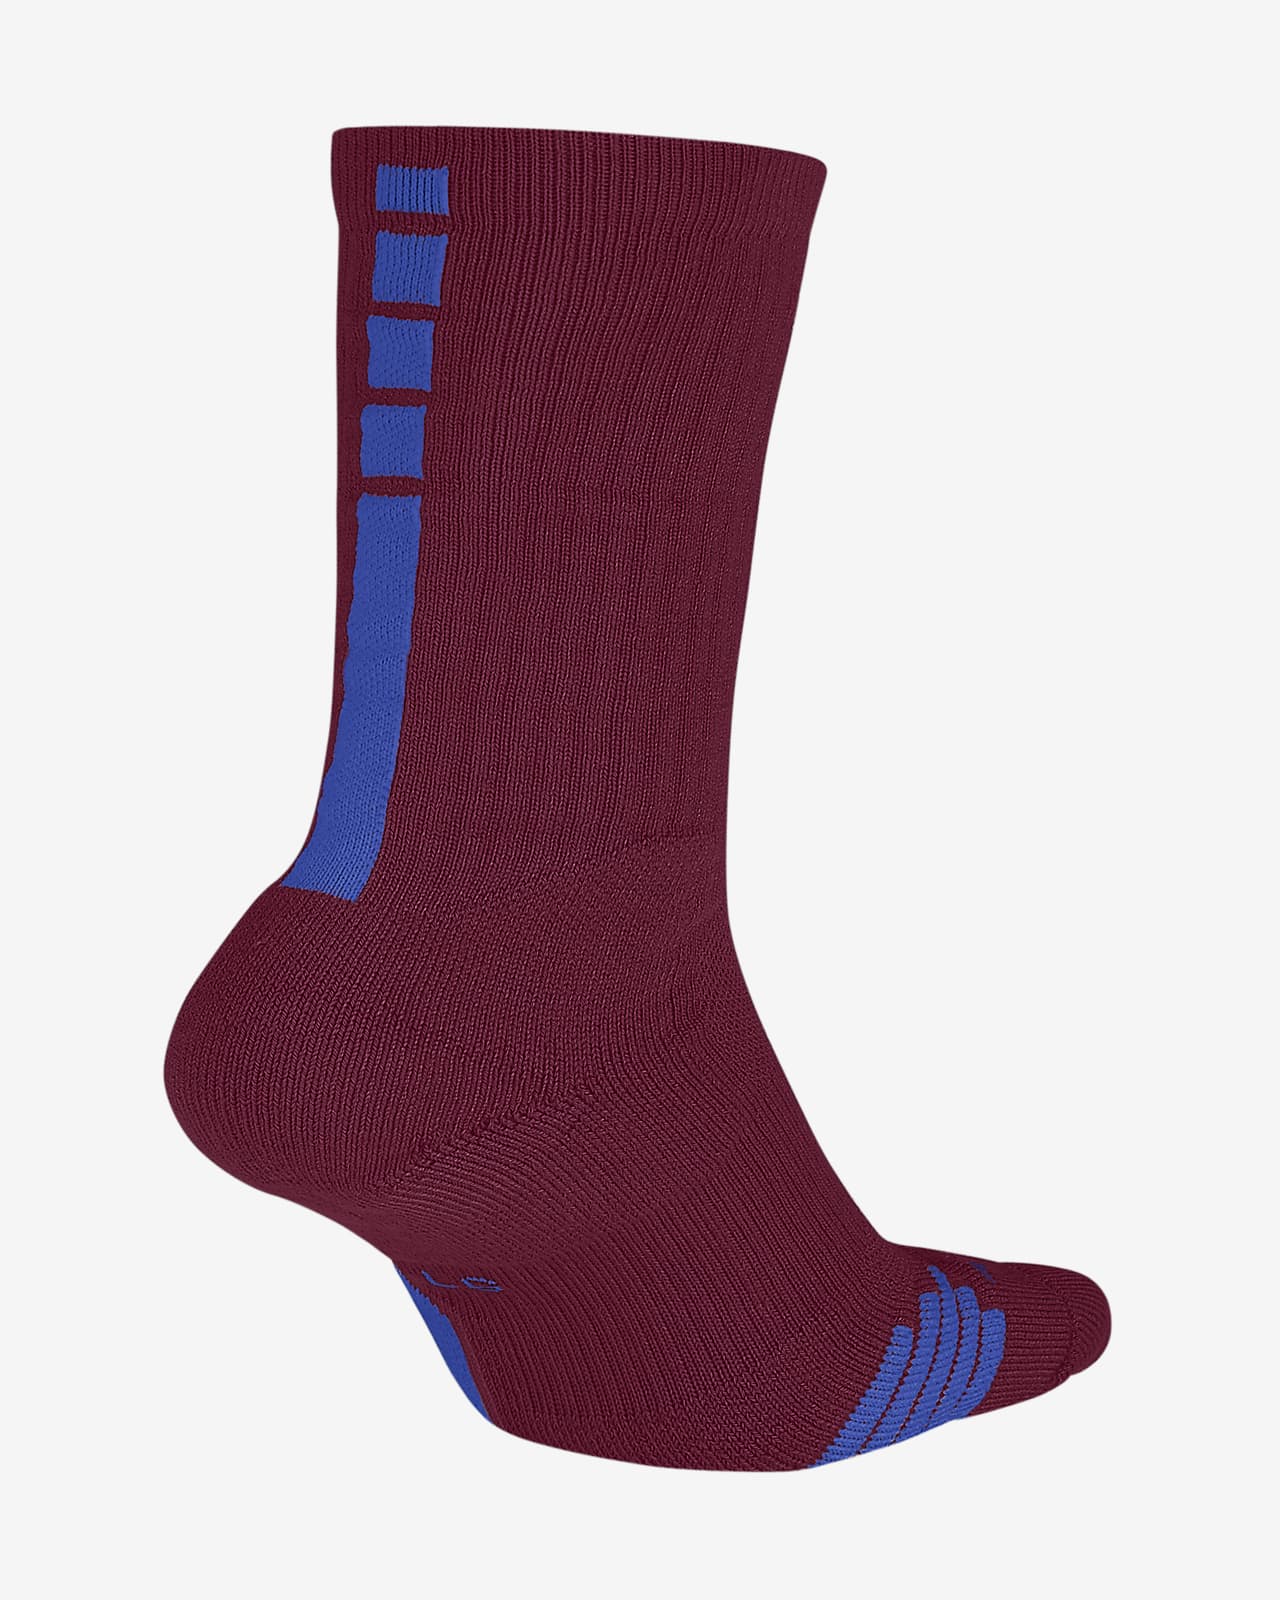 blue and pink elite socks